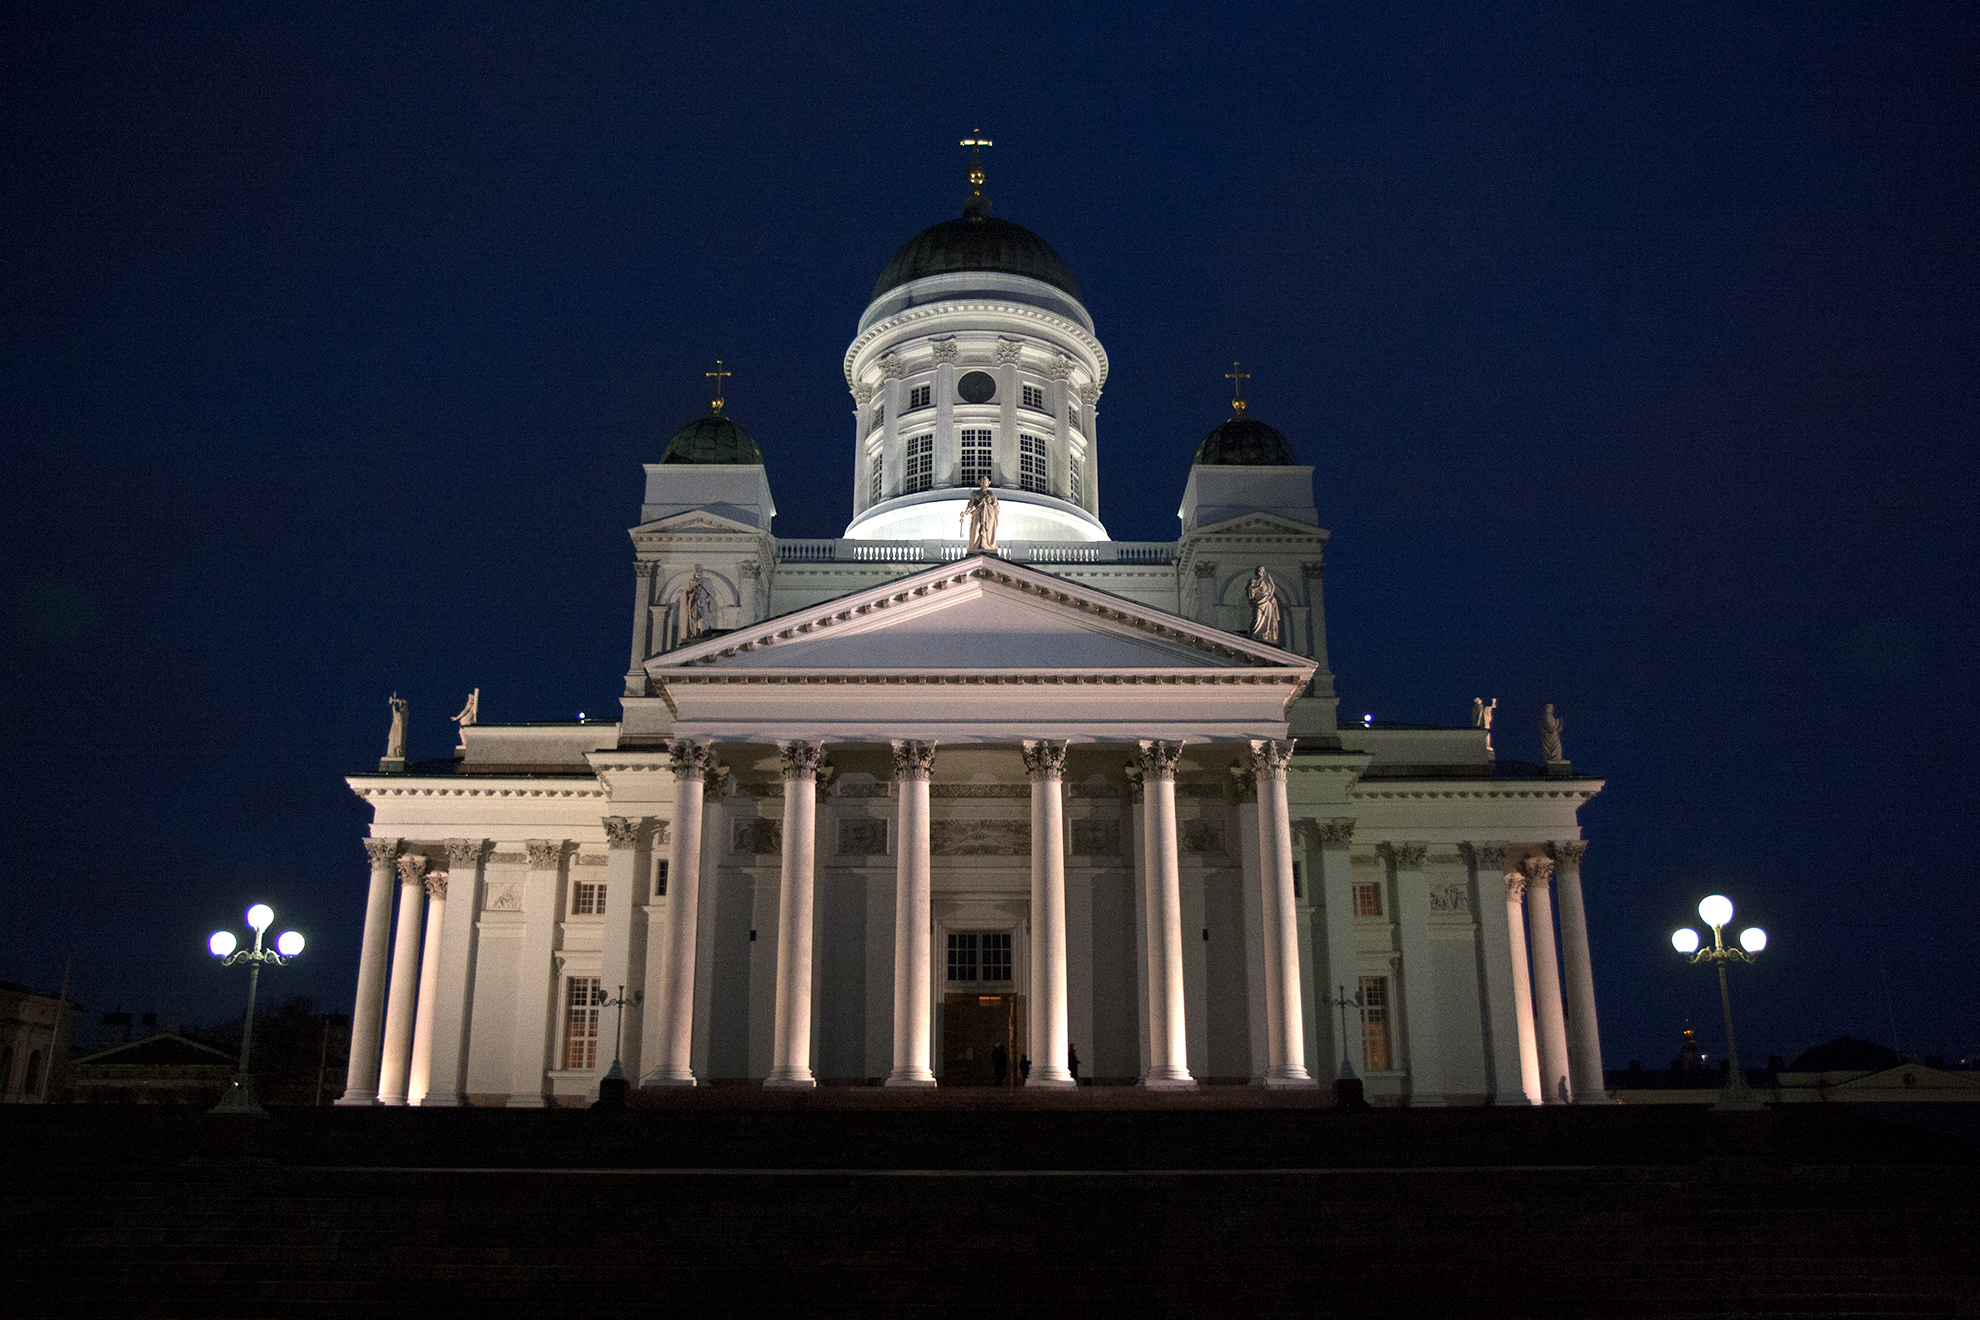 Helsinki during night